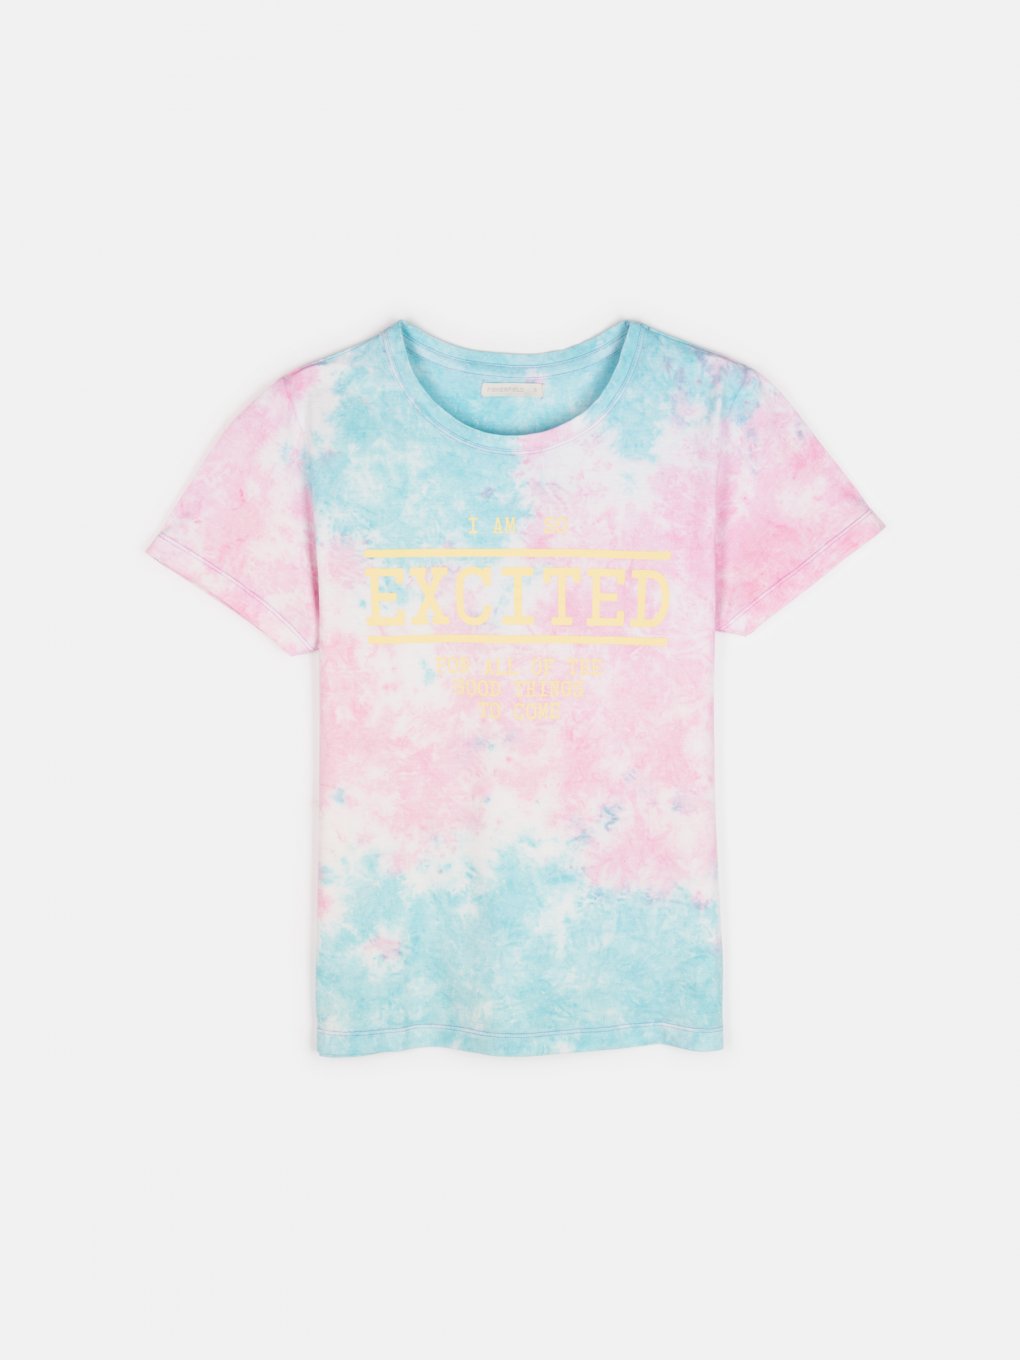 Cotton tie dye t-shirt with print